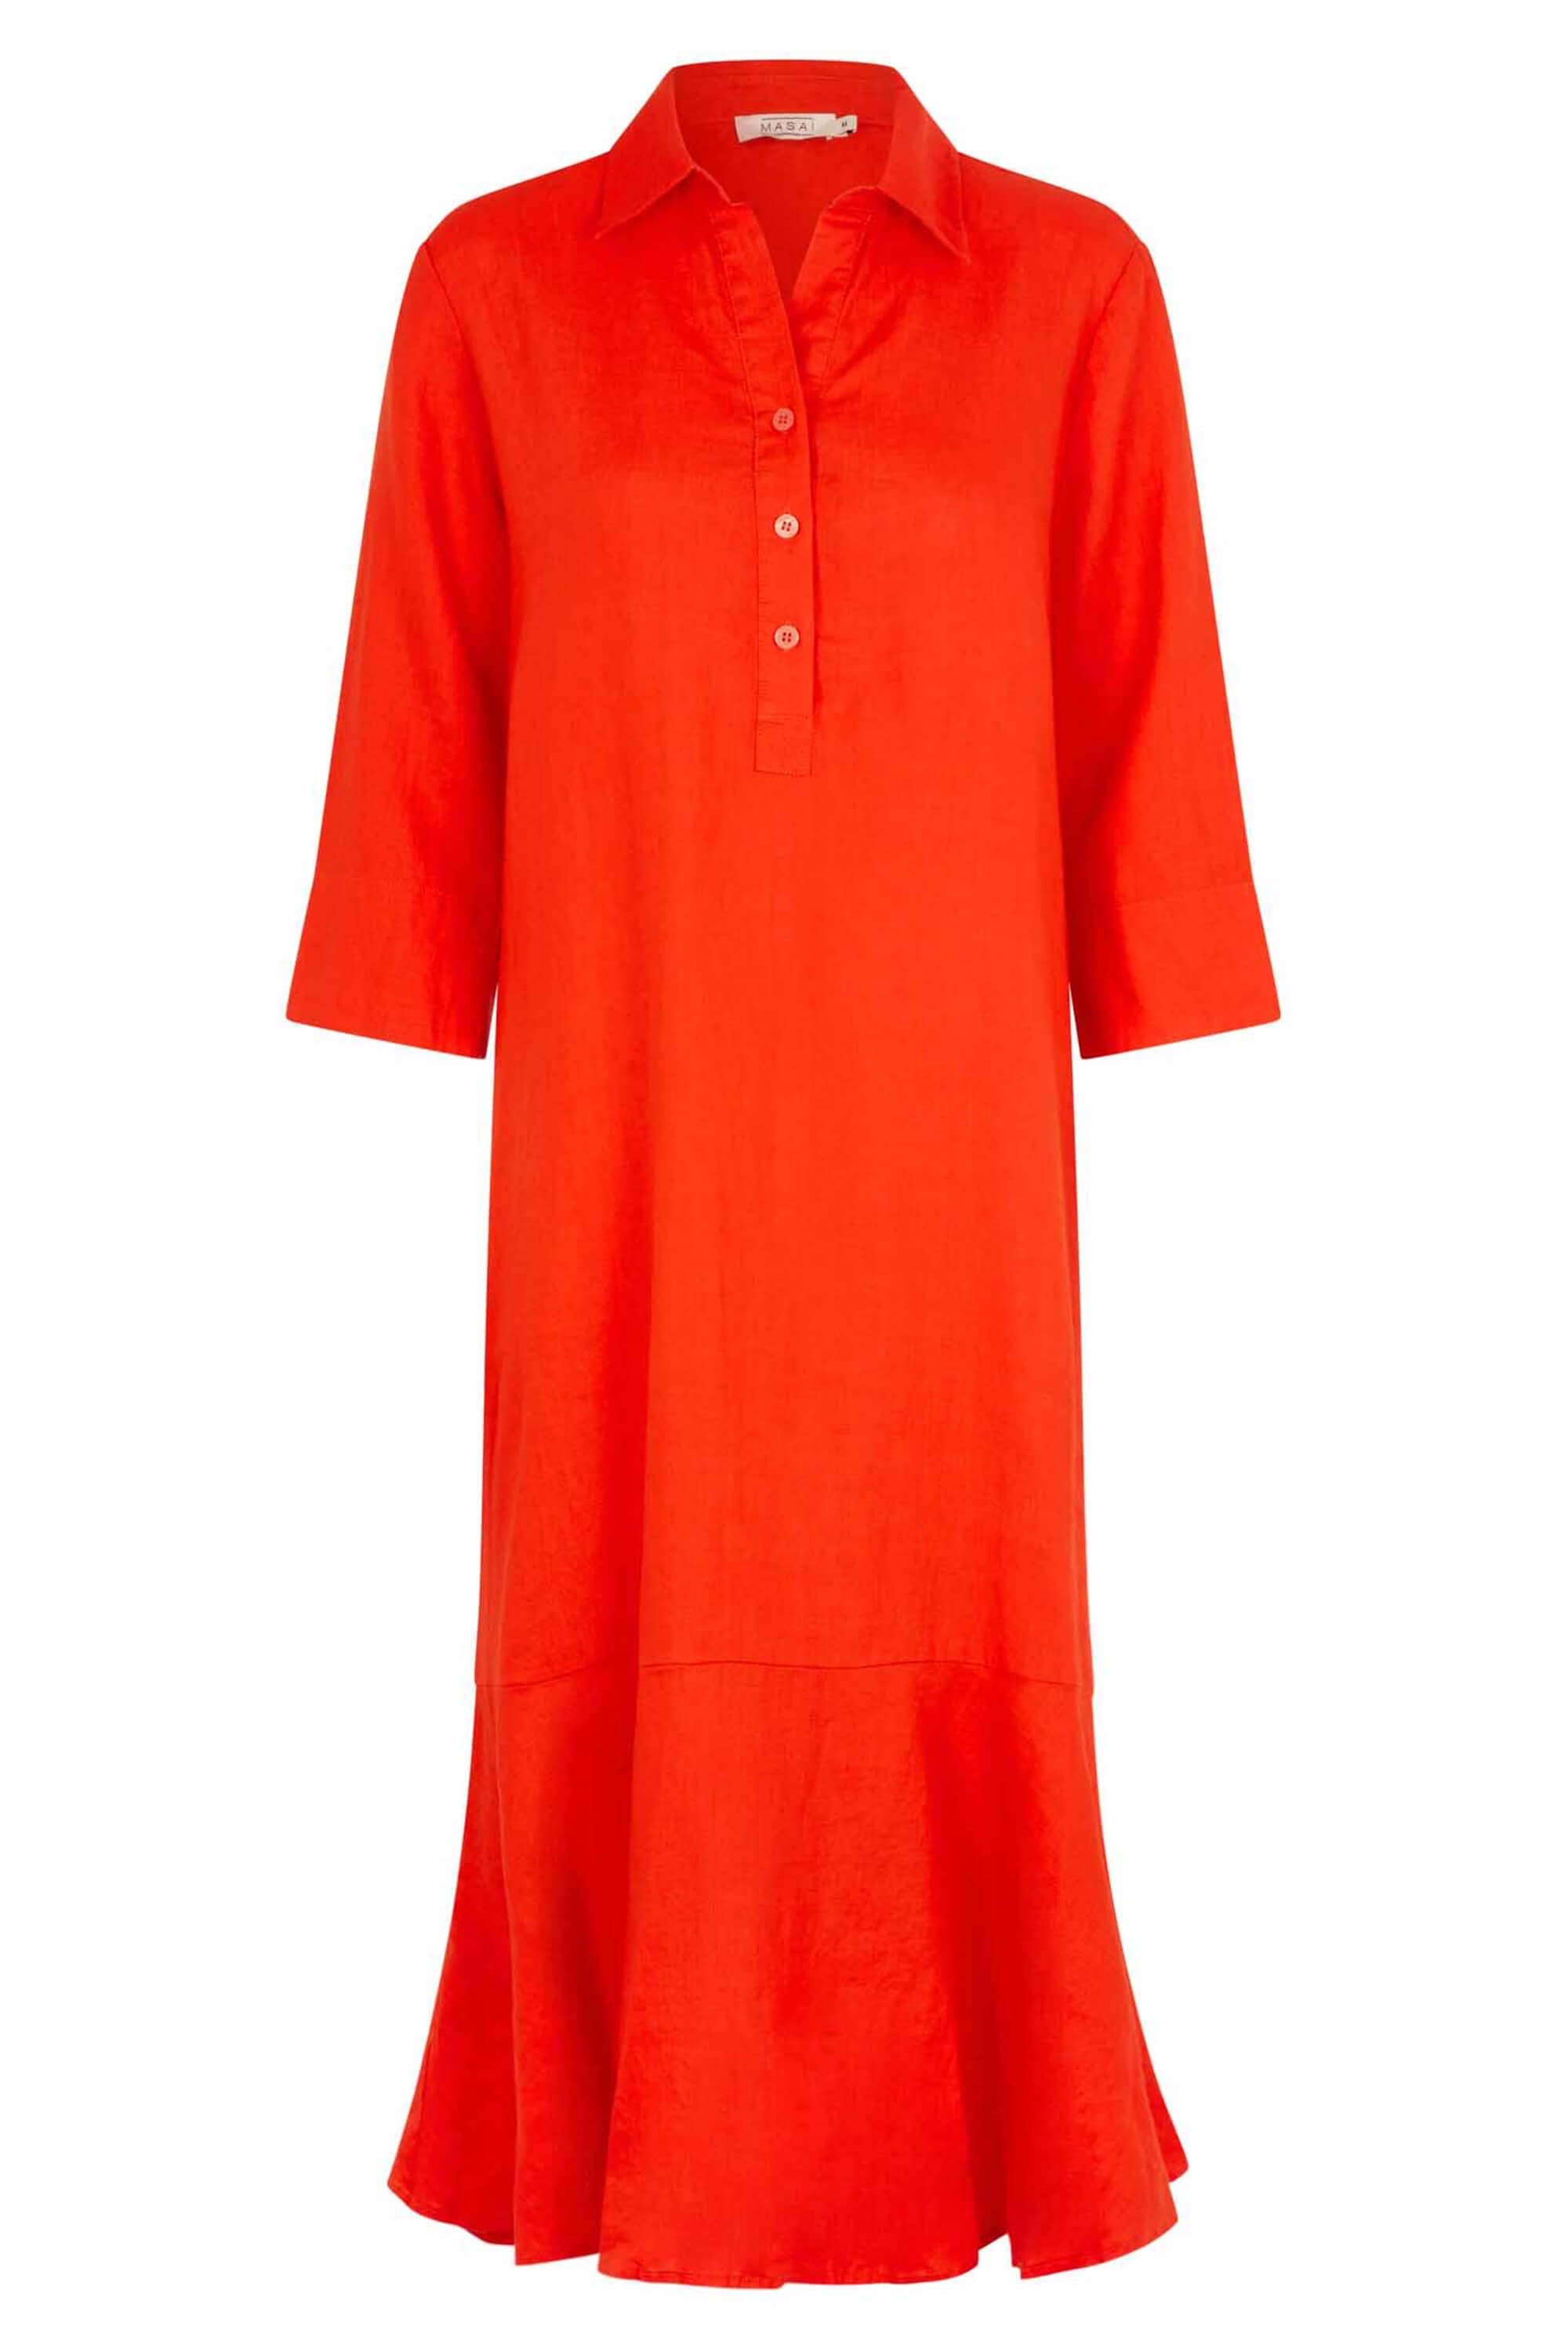 Masai Nimuene 3/4 length Dress Orange